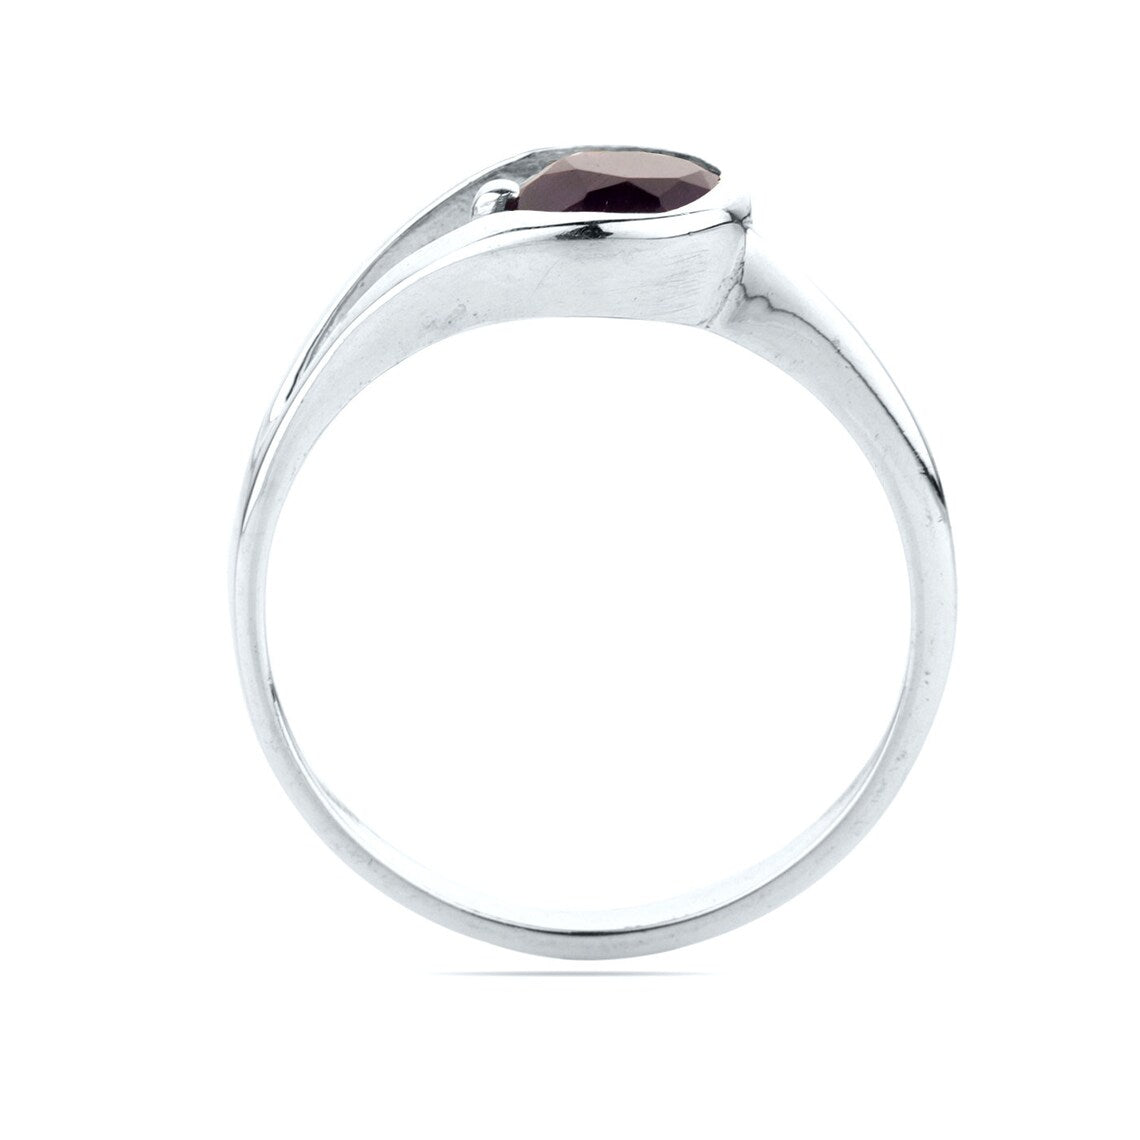 Round Amethyst Ring, Amethyst Sterling Silver Ring, Amethyst Gemstone Ring, Round Cut Amethyst Ring